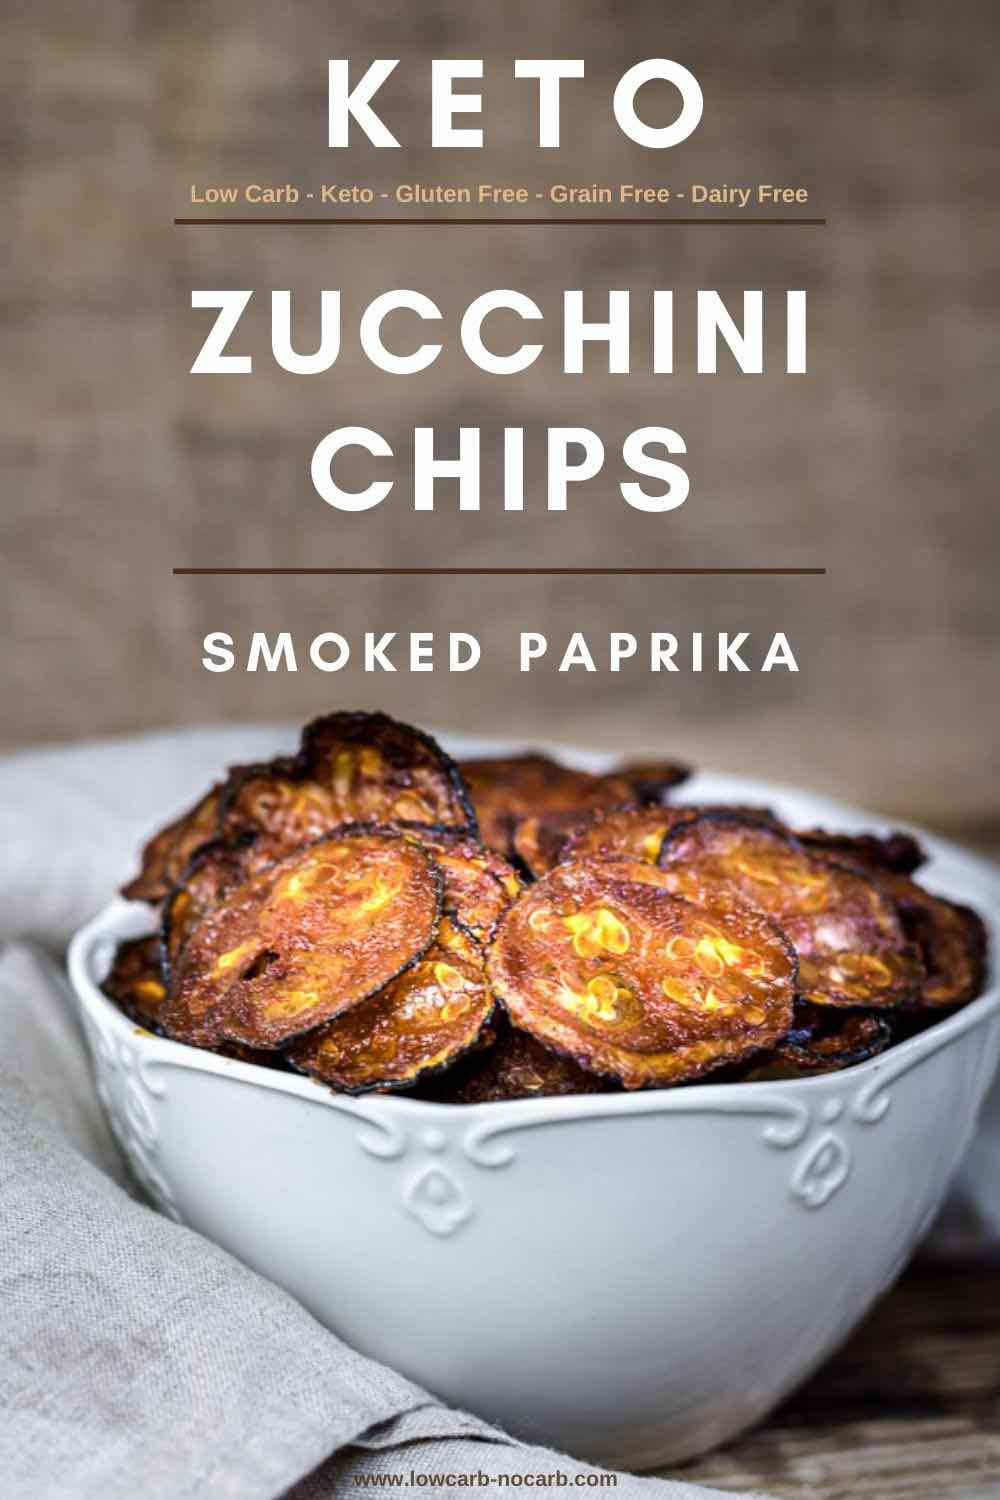 Keto zucchini Chips in a white bowl